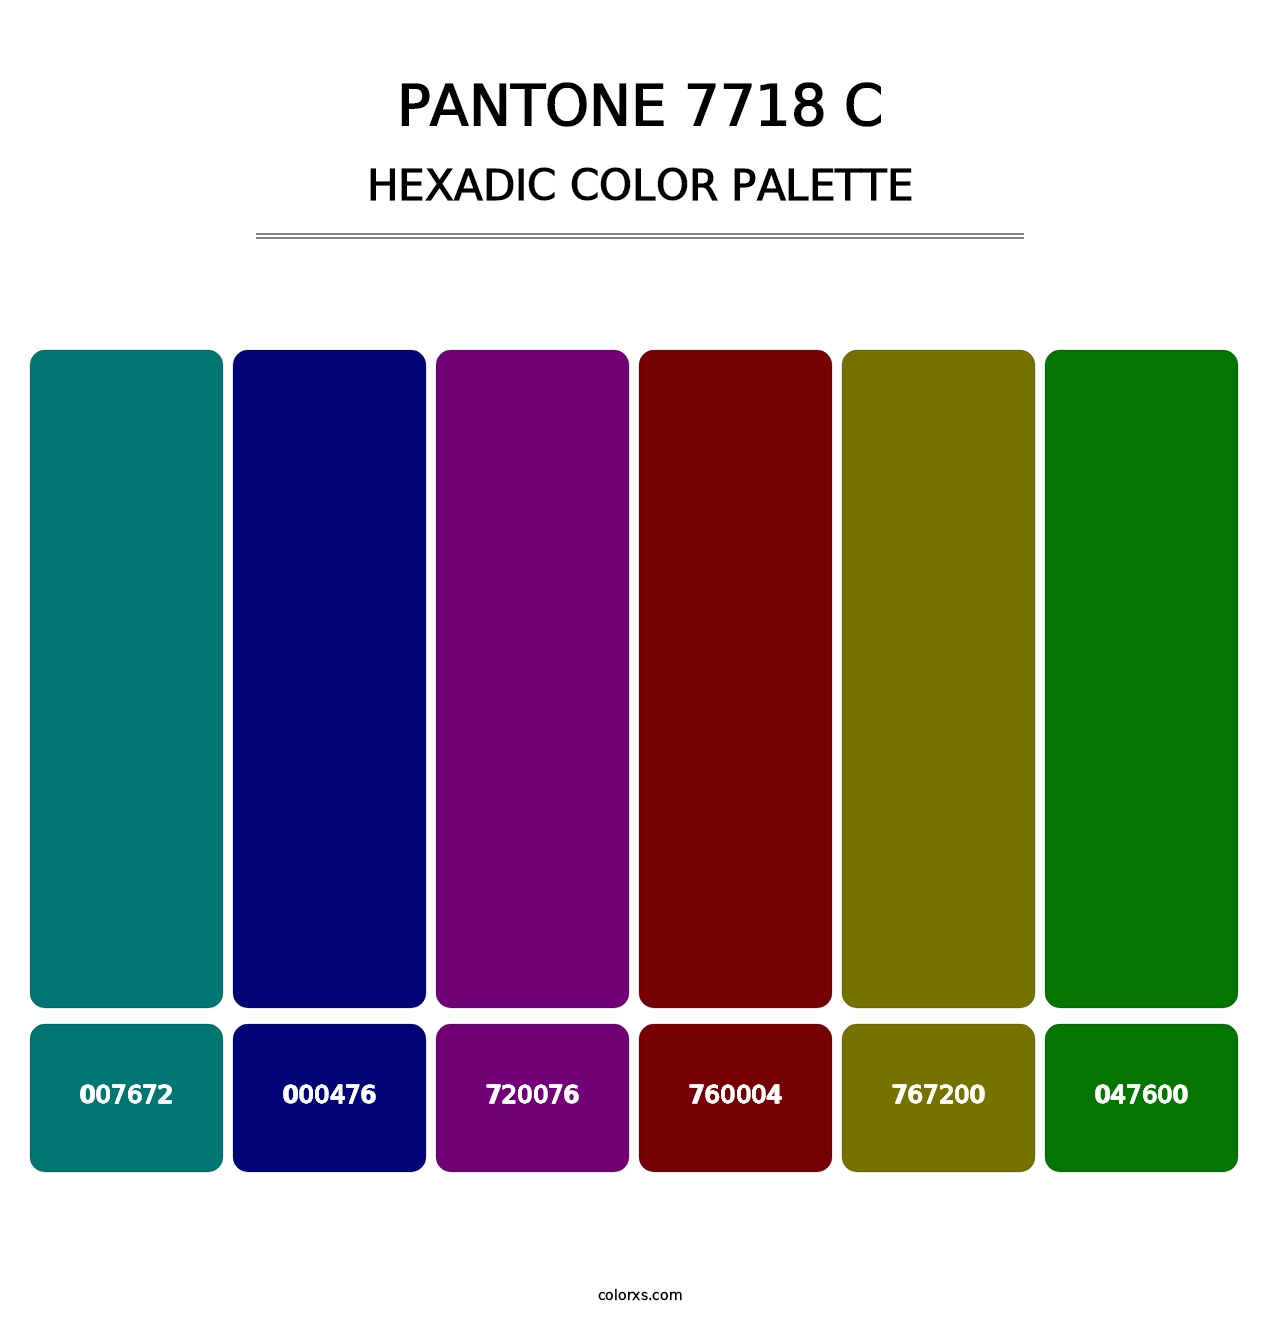 PANTONE 7718 C - Hexadic Color Palette